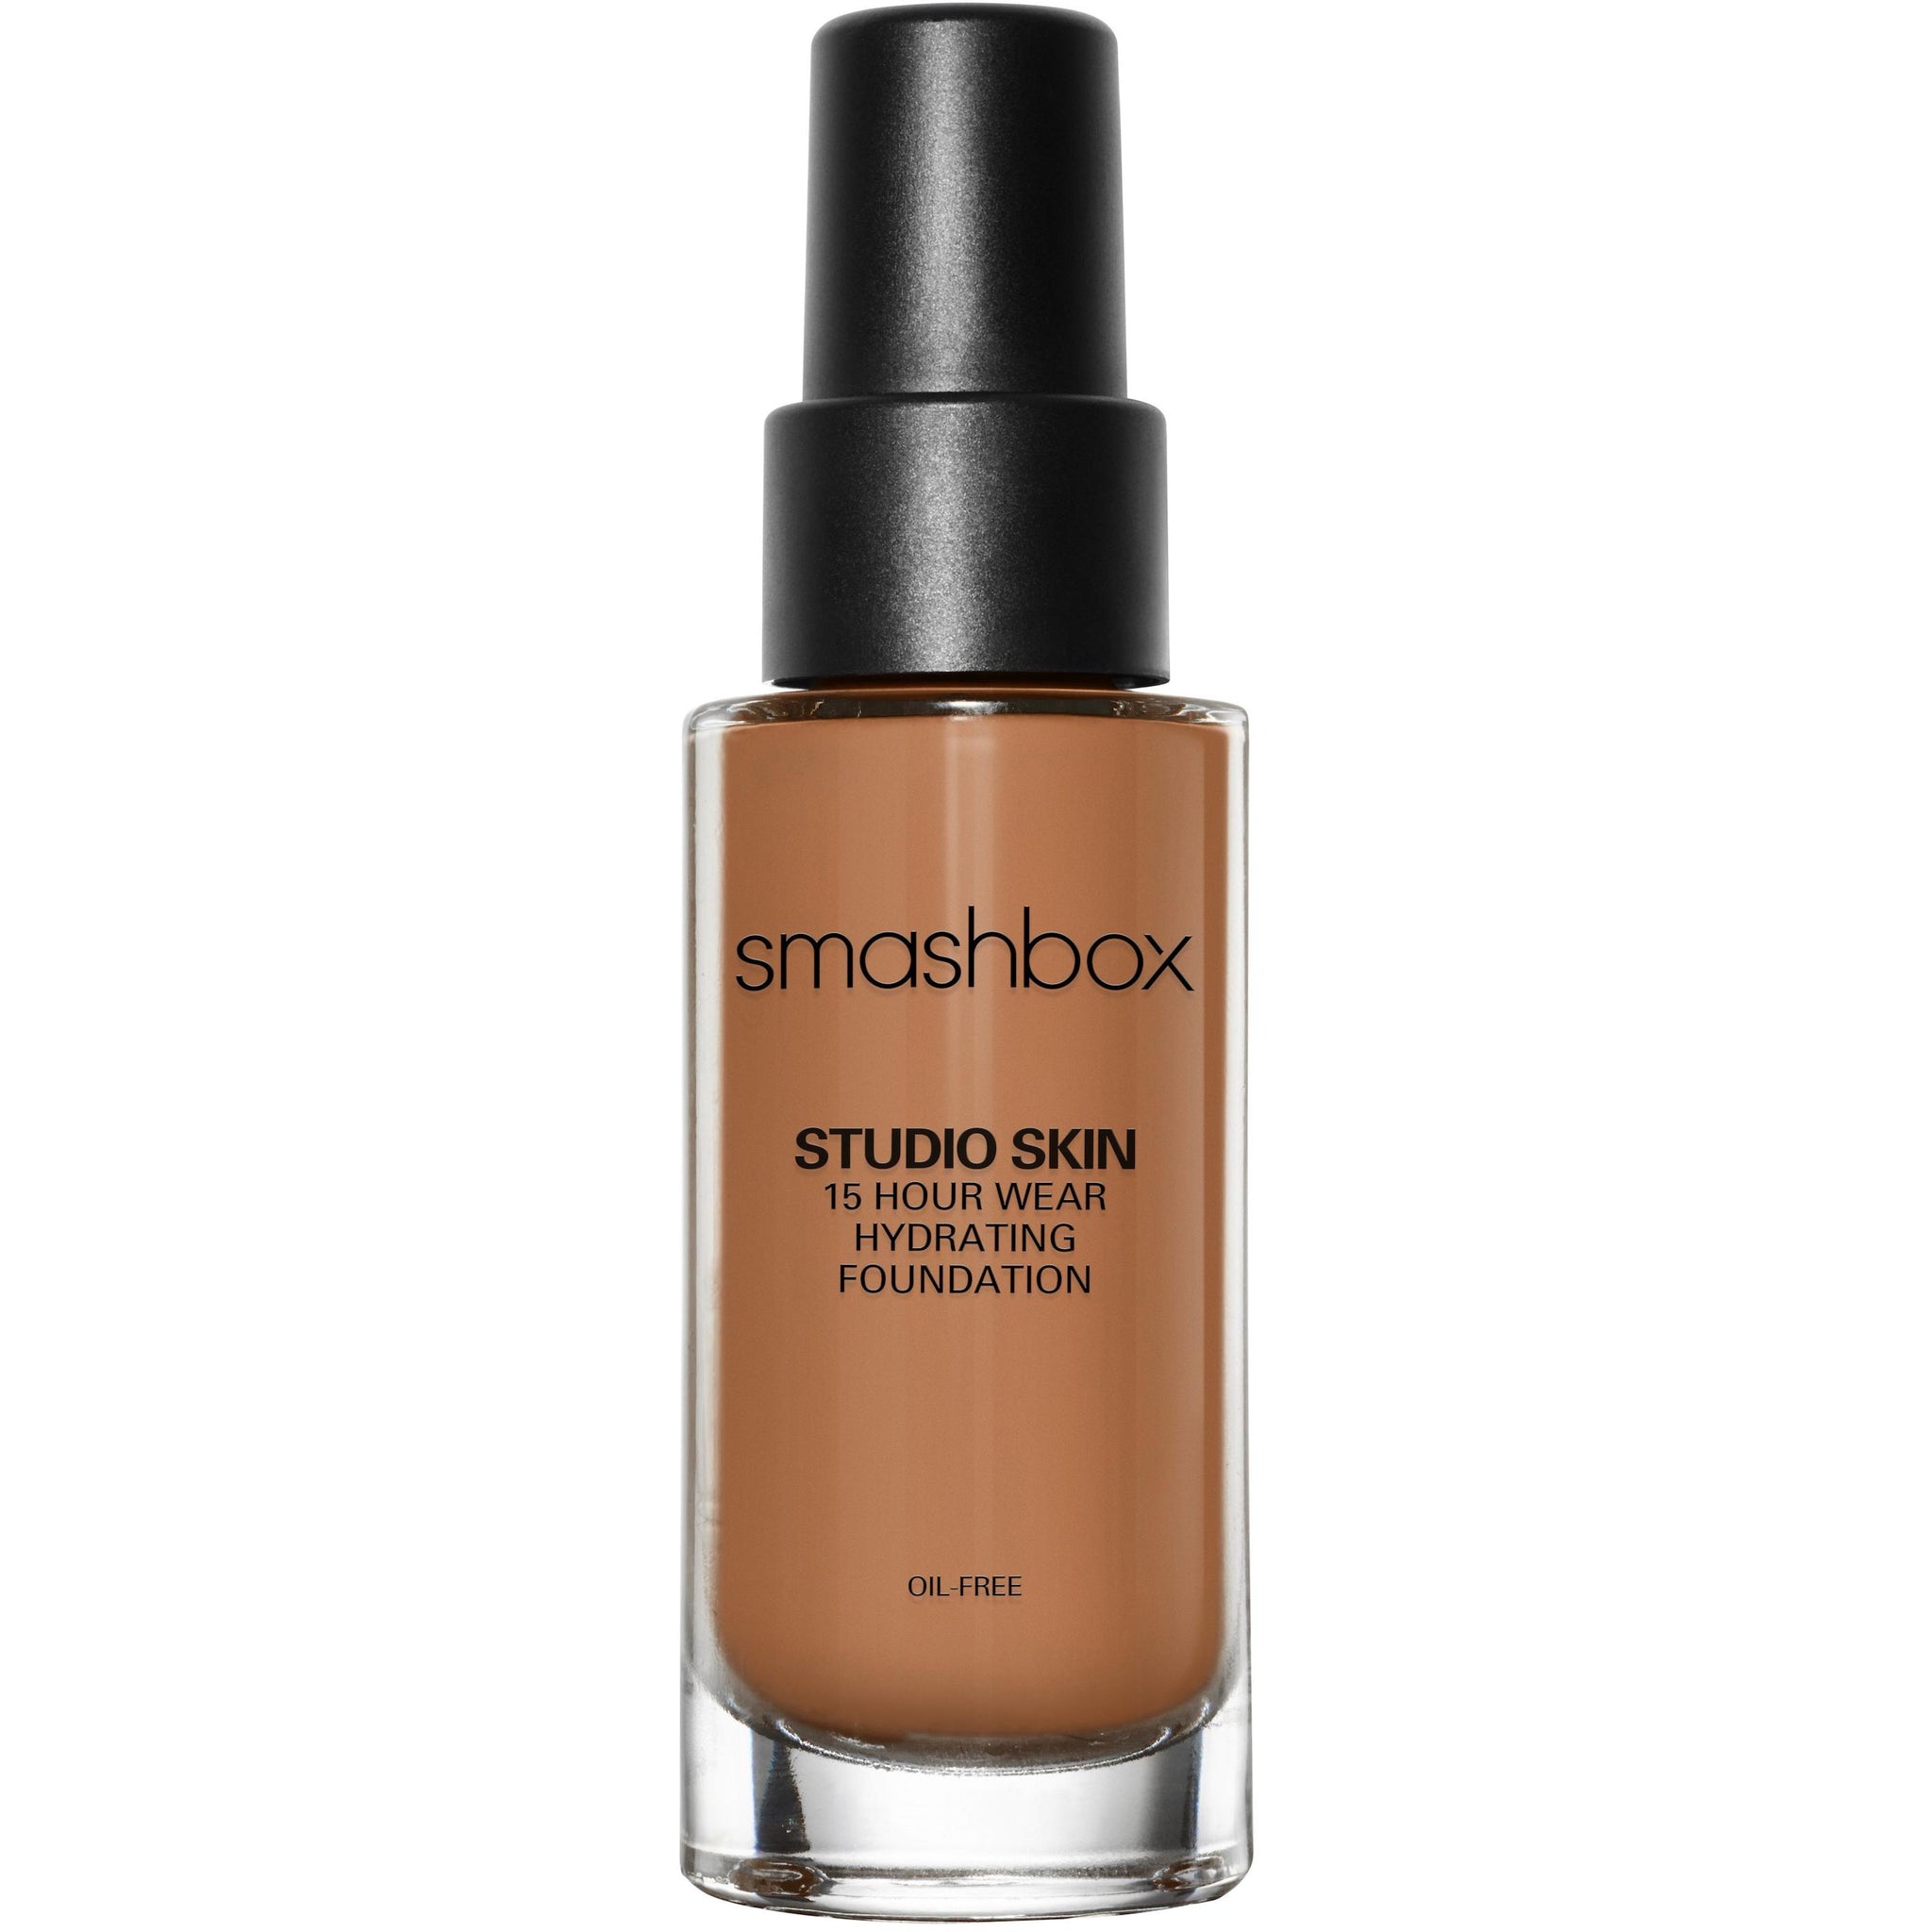 Studio Skin Foundation farði - Smashbox